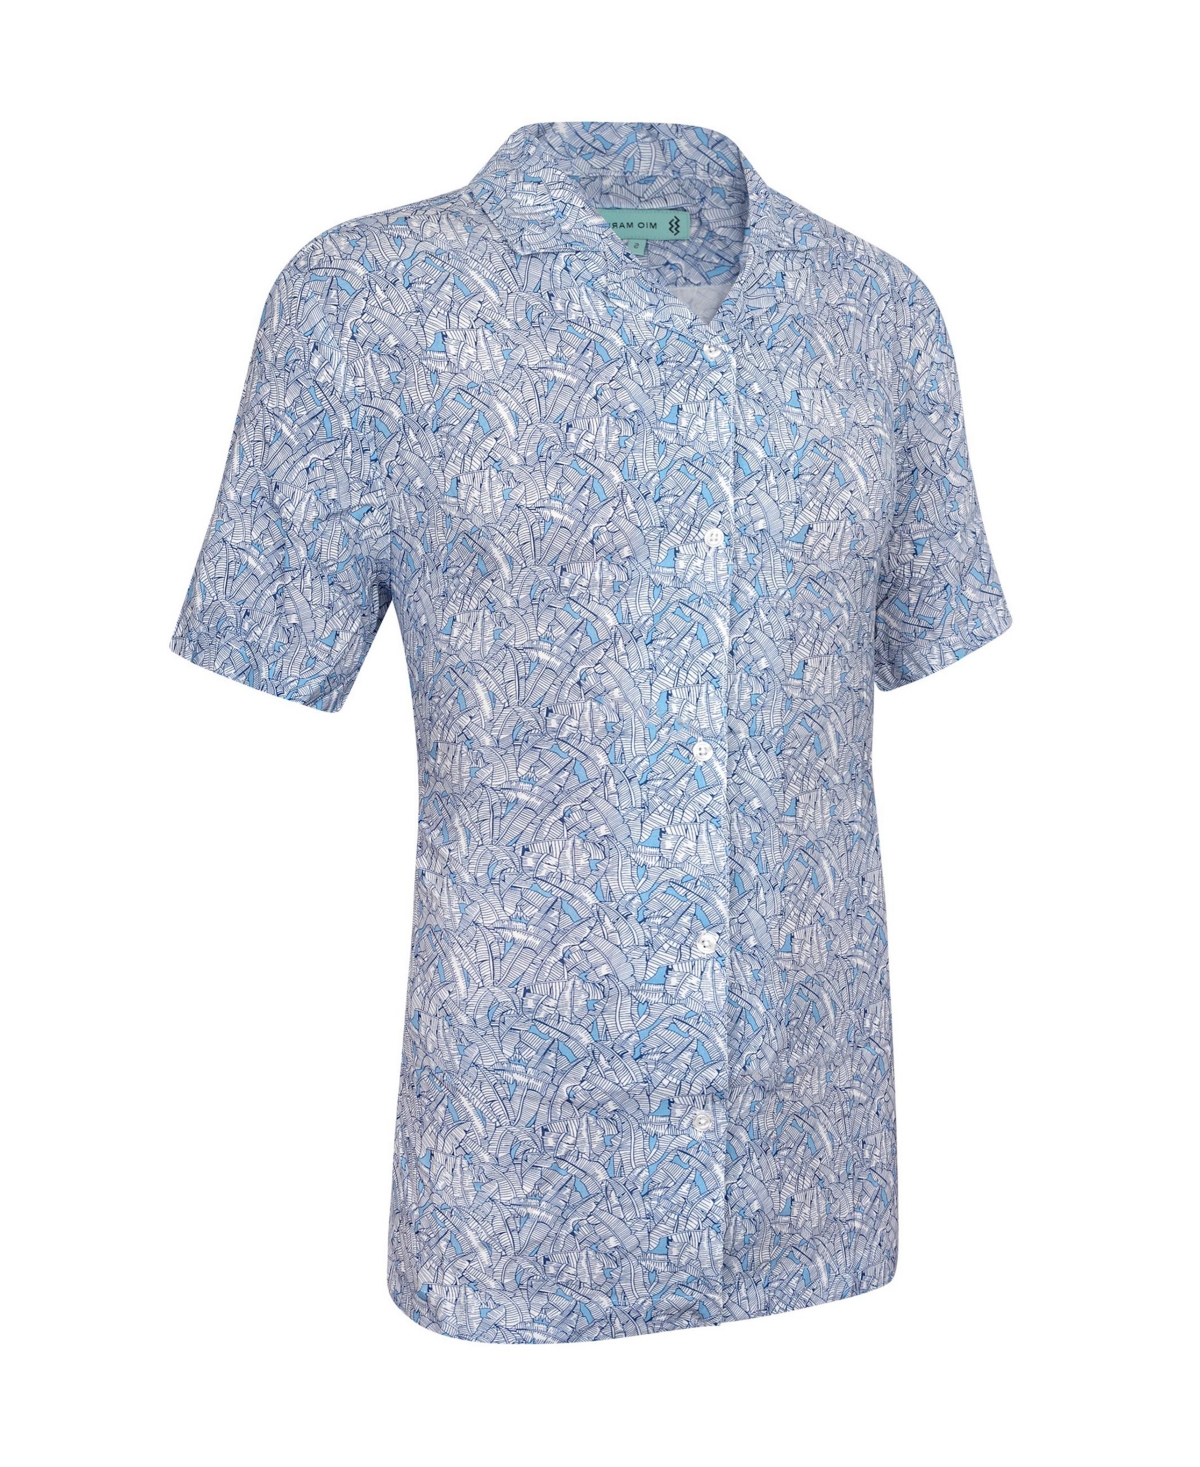 Mens Casual Button-Down Hawaiian Shirt - Short Sleeve - Speckled sahara